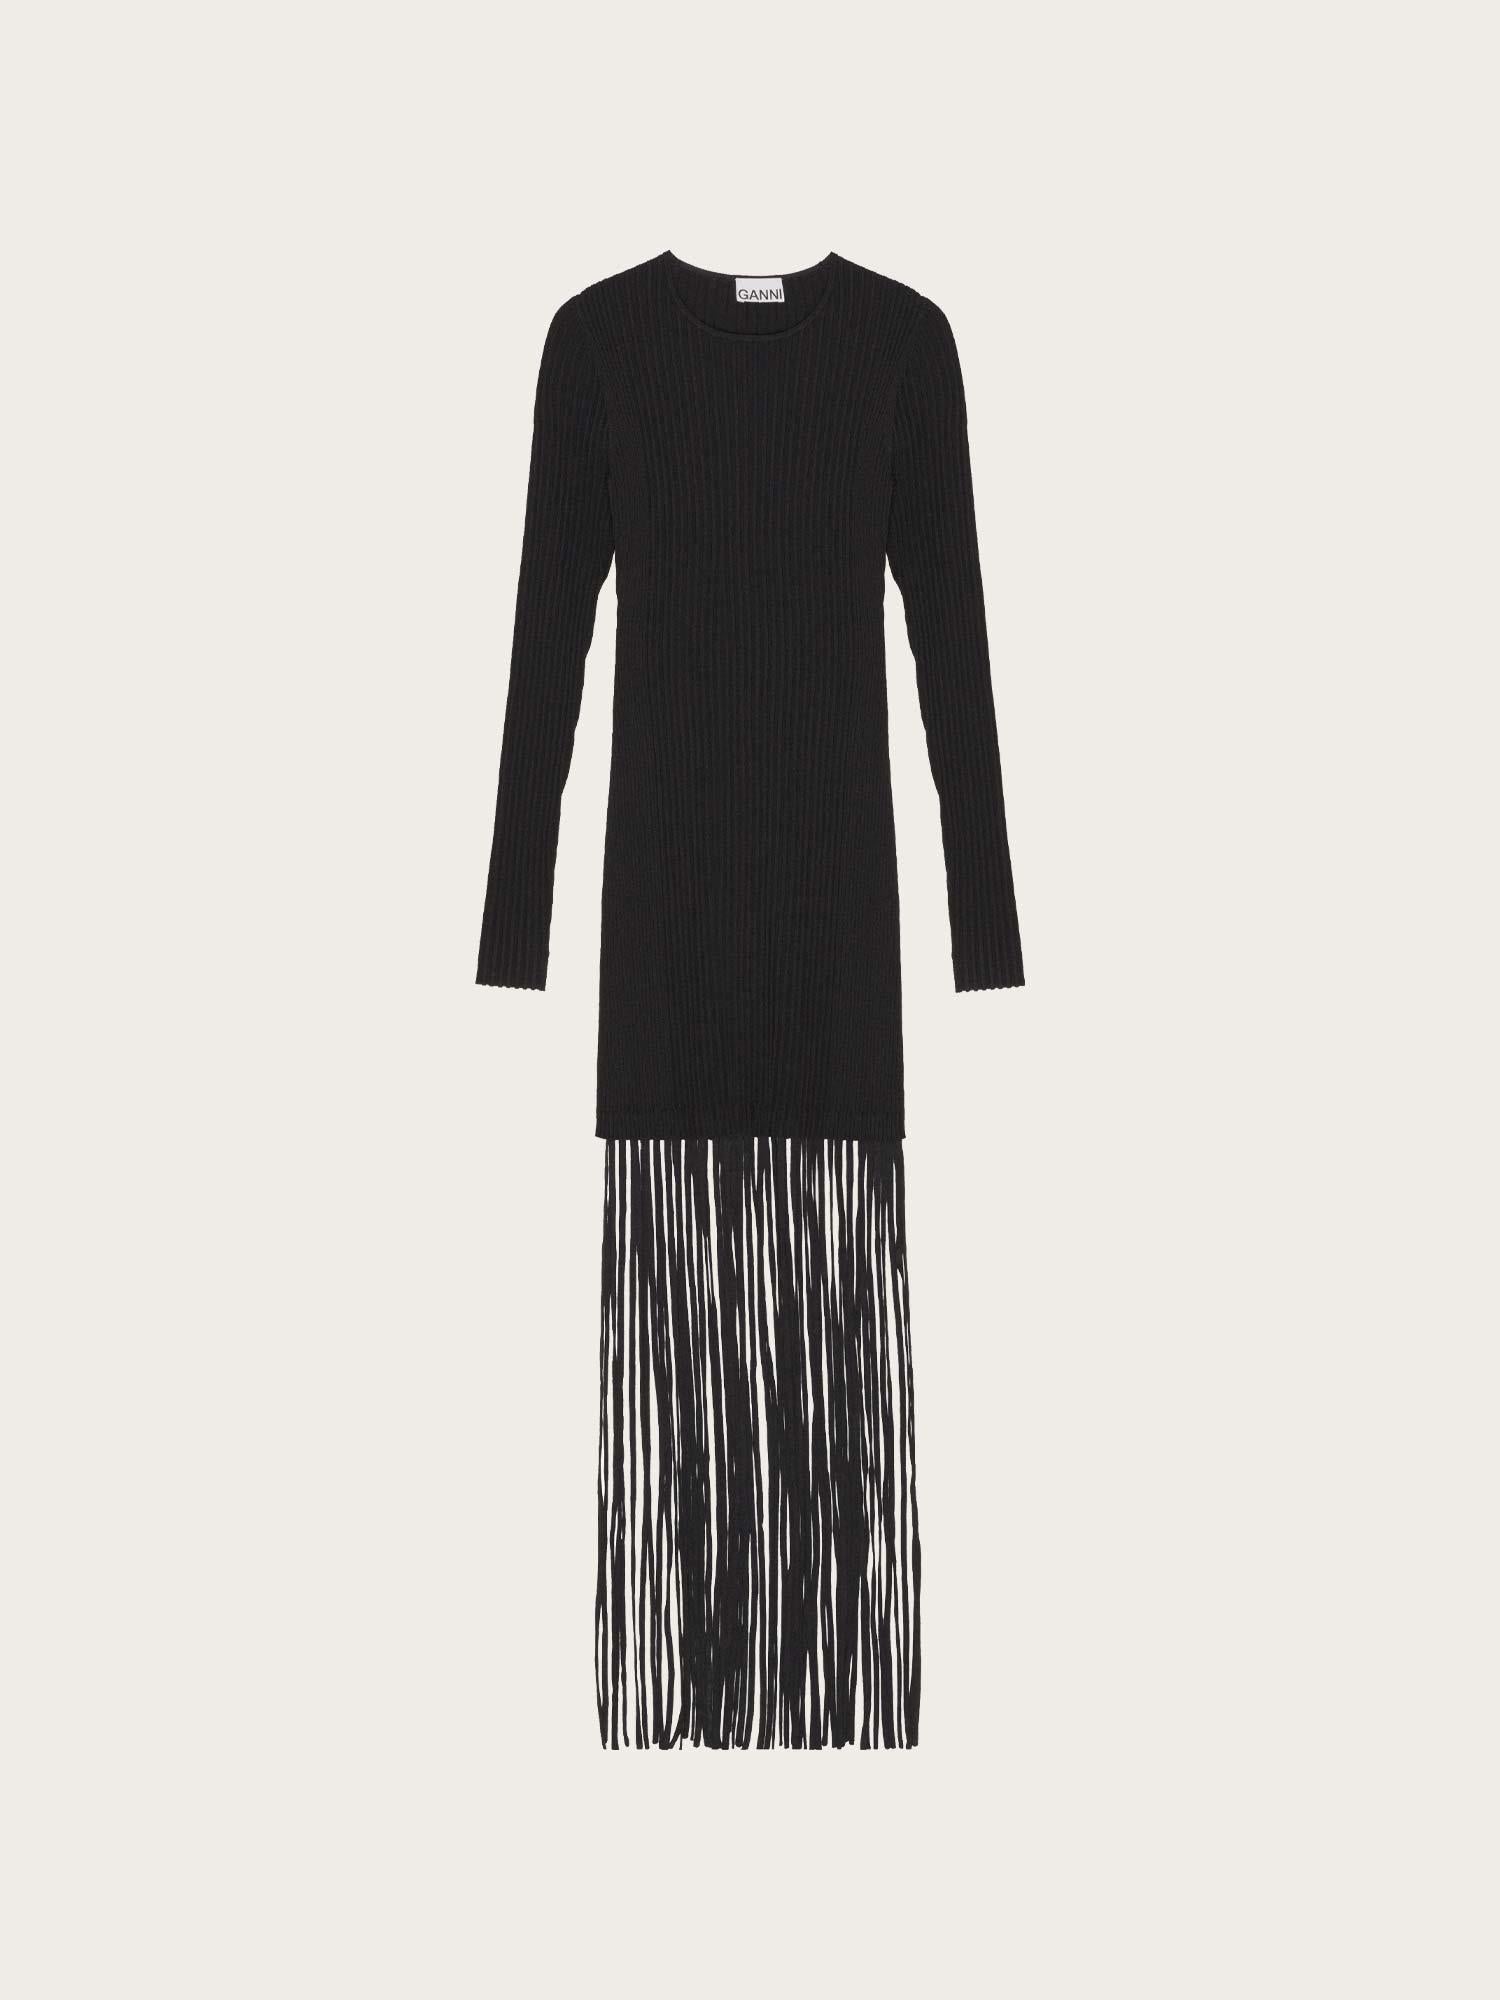 K1988 Melange Knit Fringe Mini Dress - Black